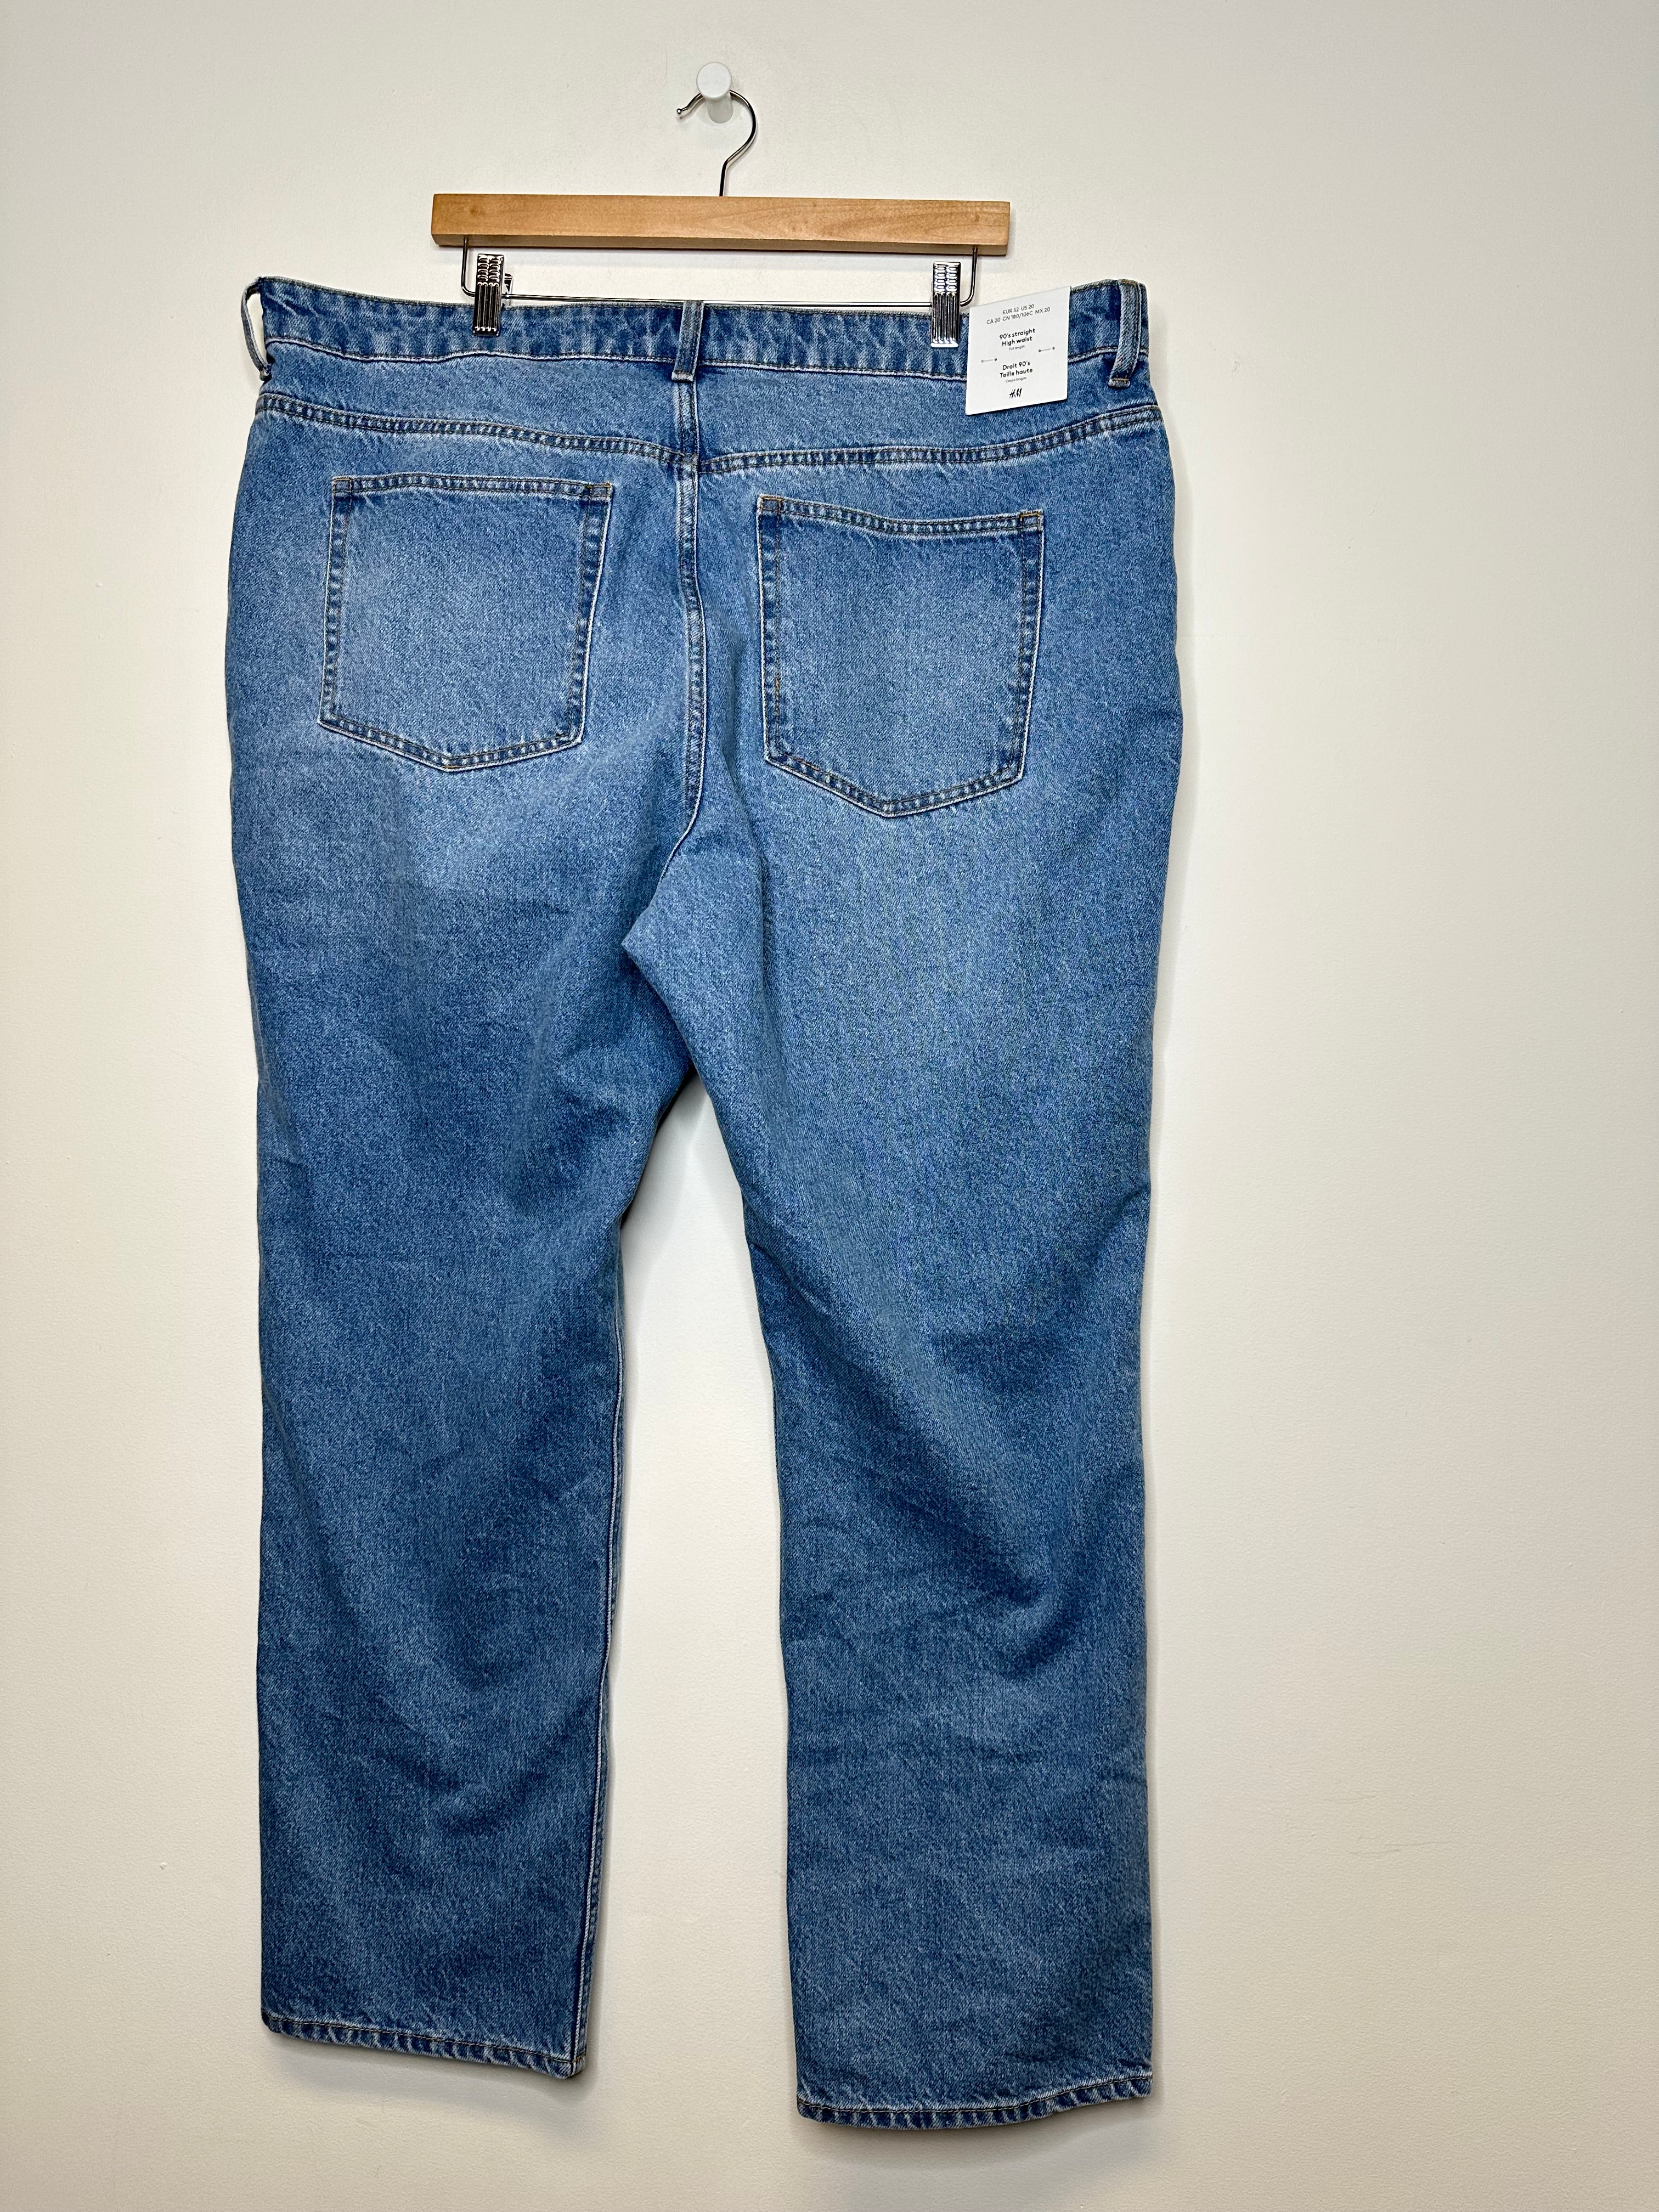 H&M Blue Jeans - 20 / 2XL / 43 - NEW